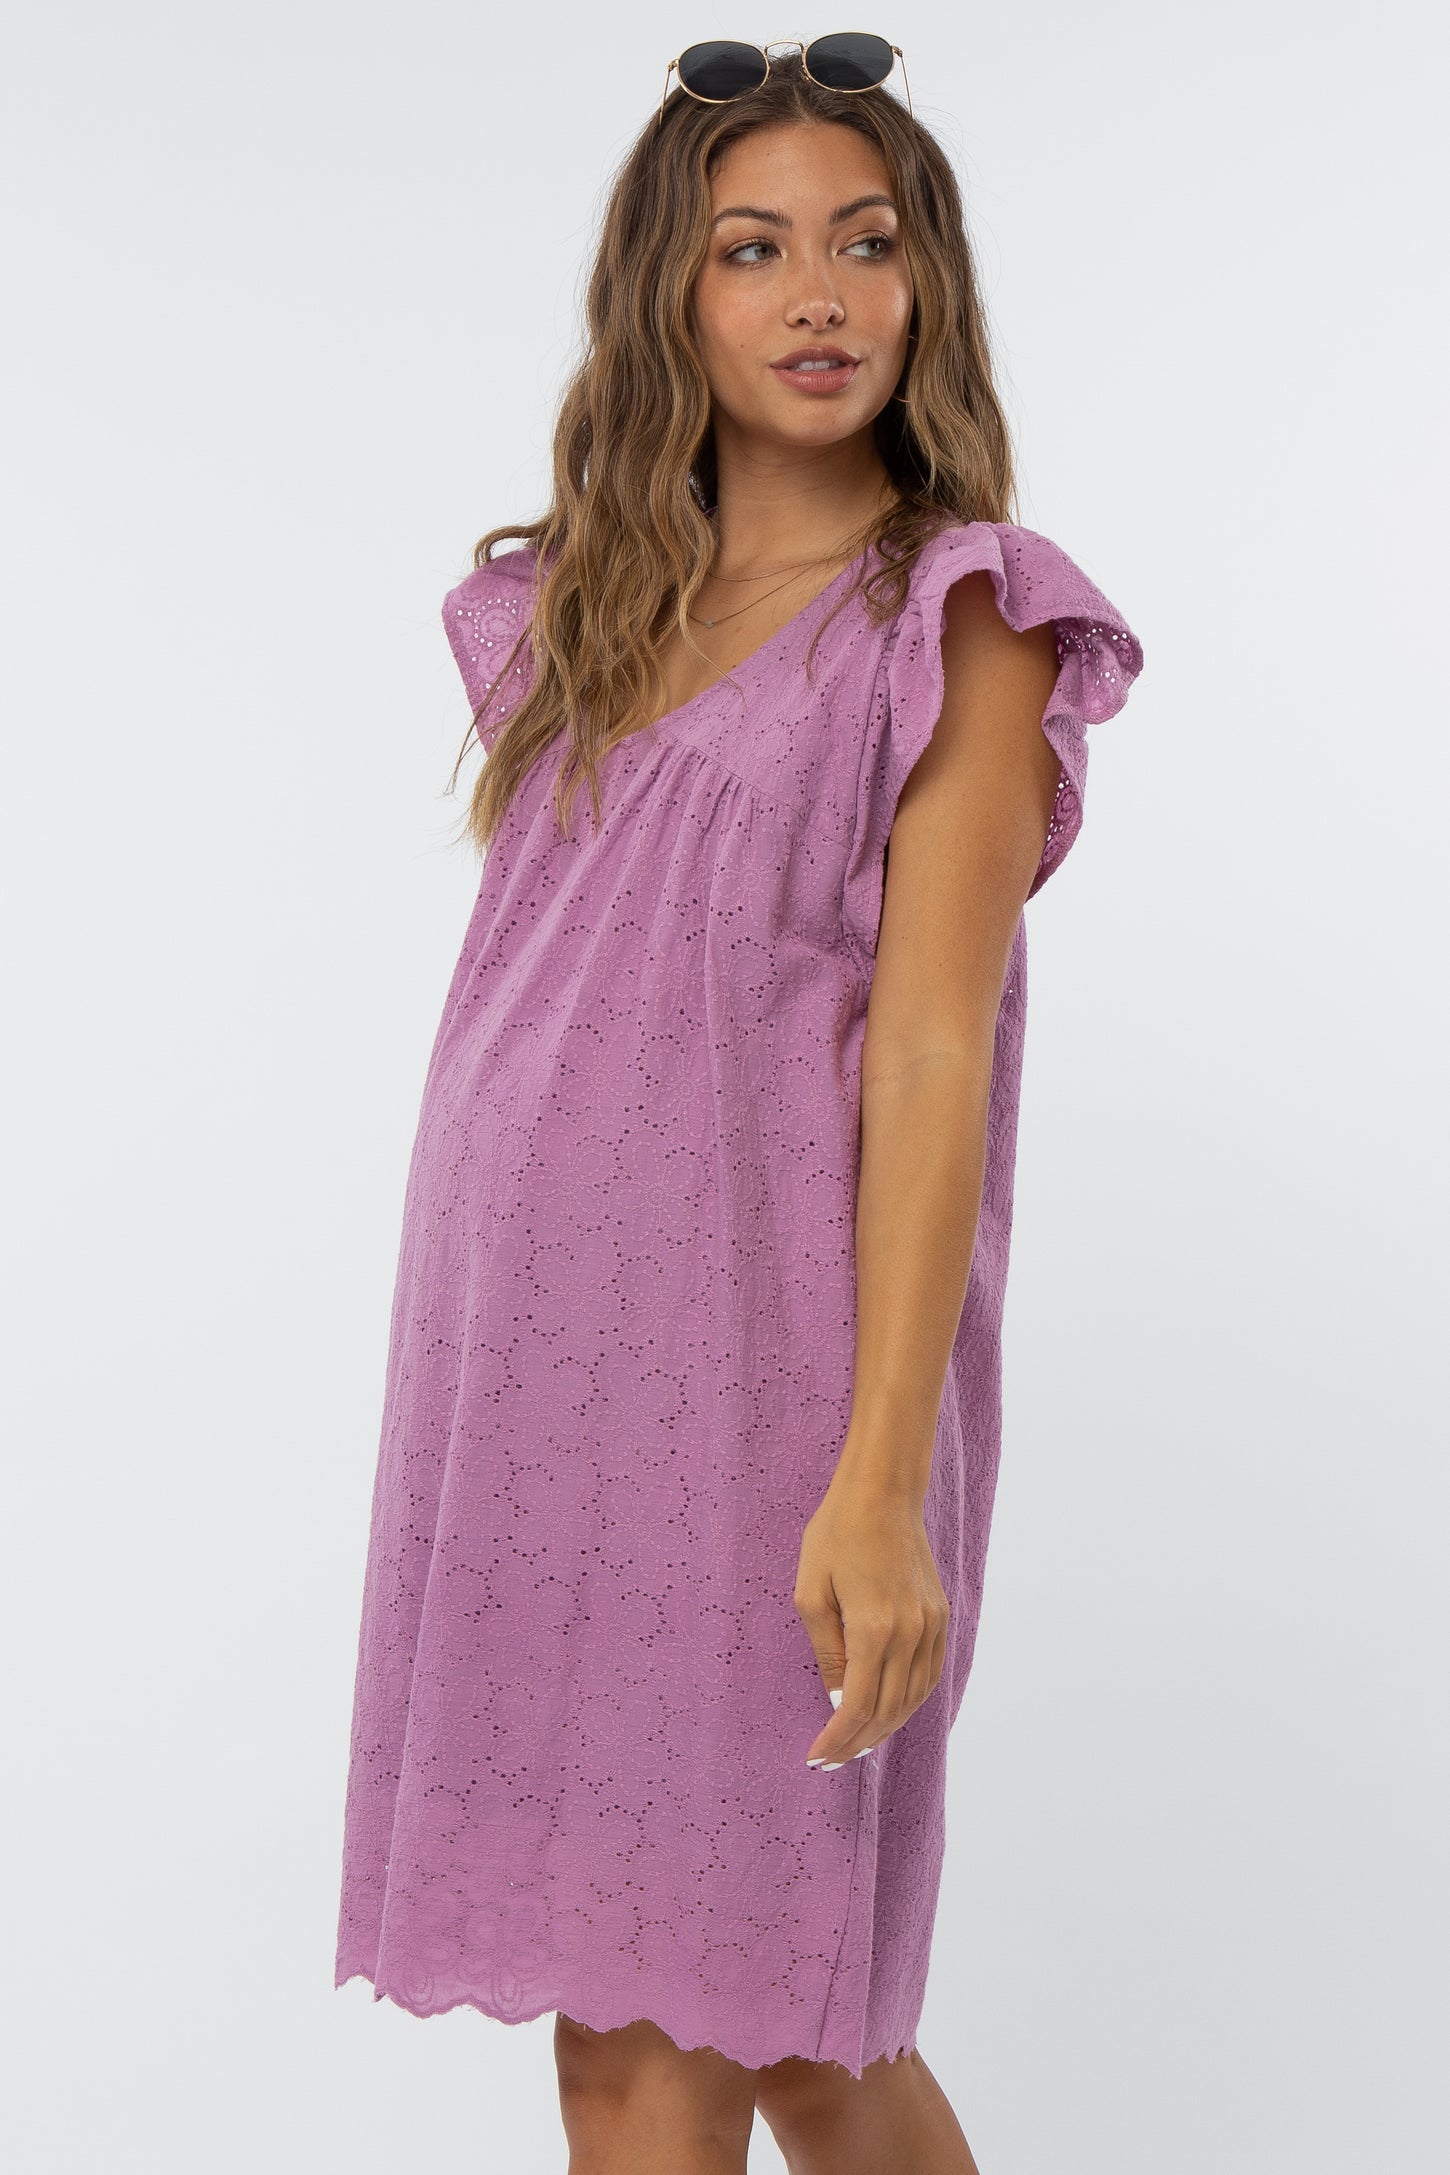 Violet Eyelet Maternity Dress